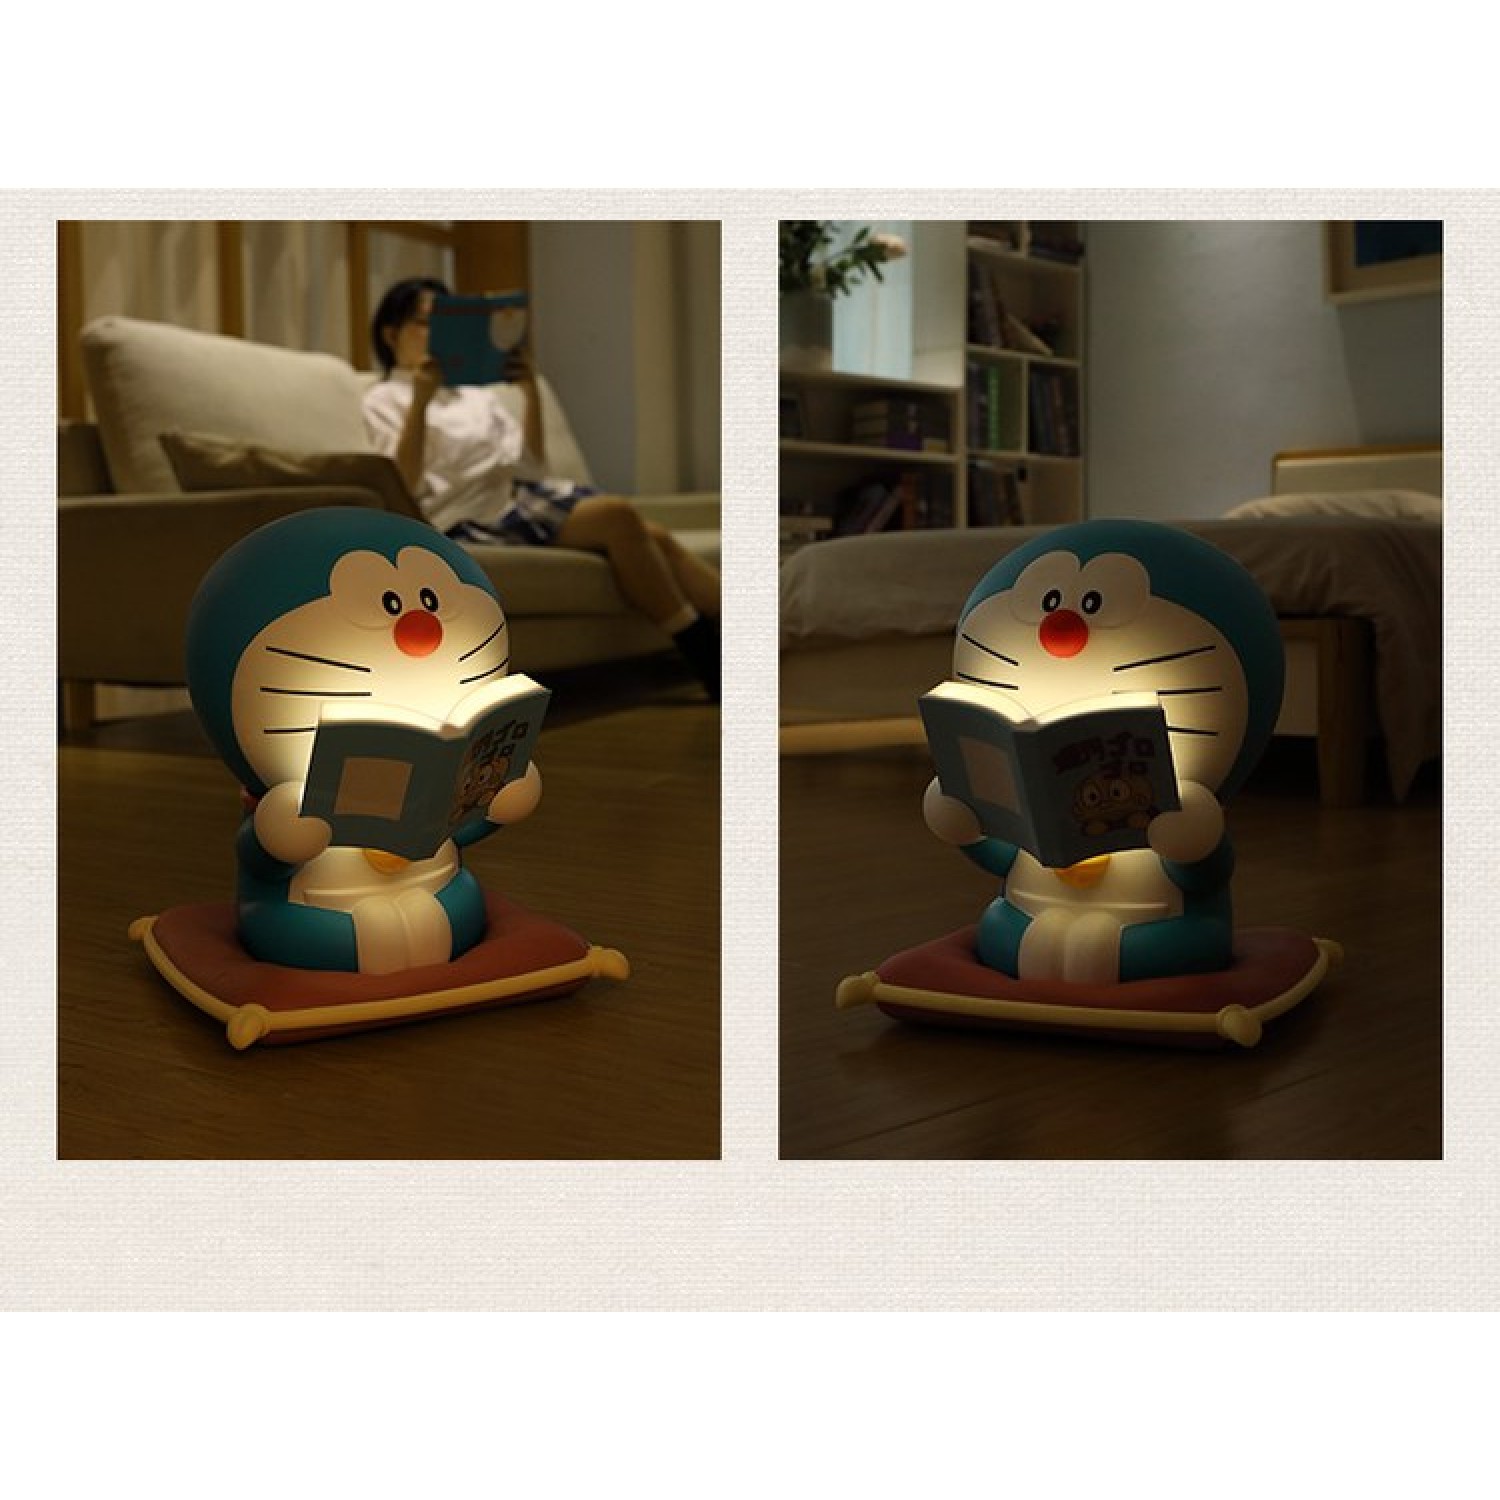 Doraemon Touch Sensitive Lamp Limited Edition 50th Anniversary